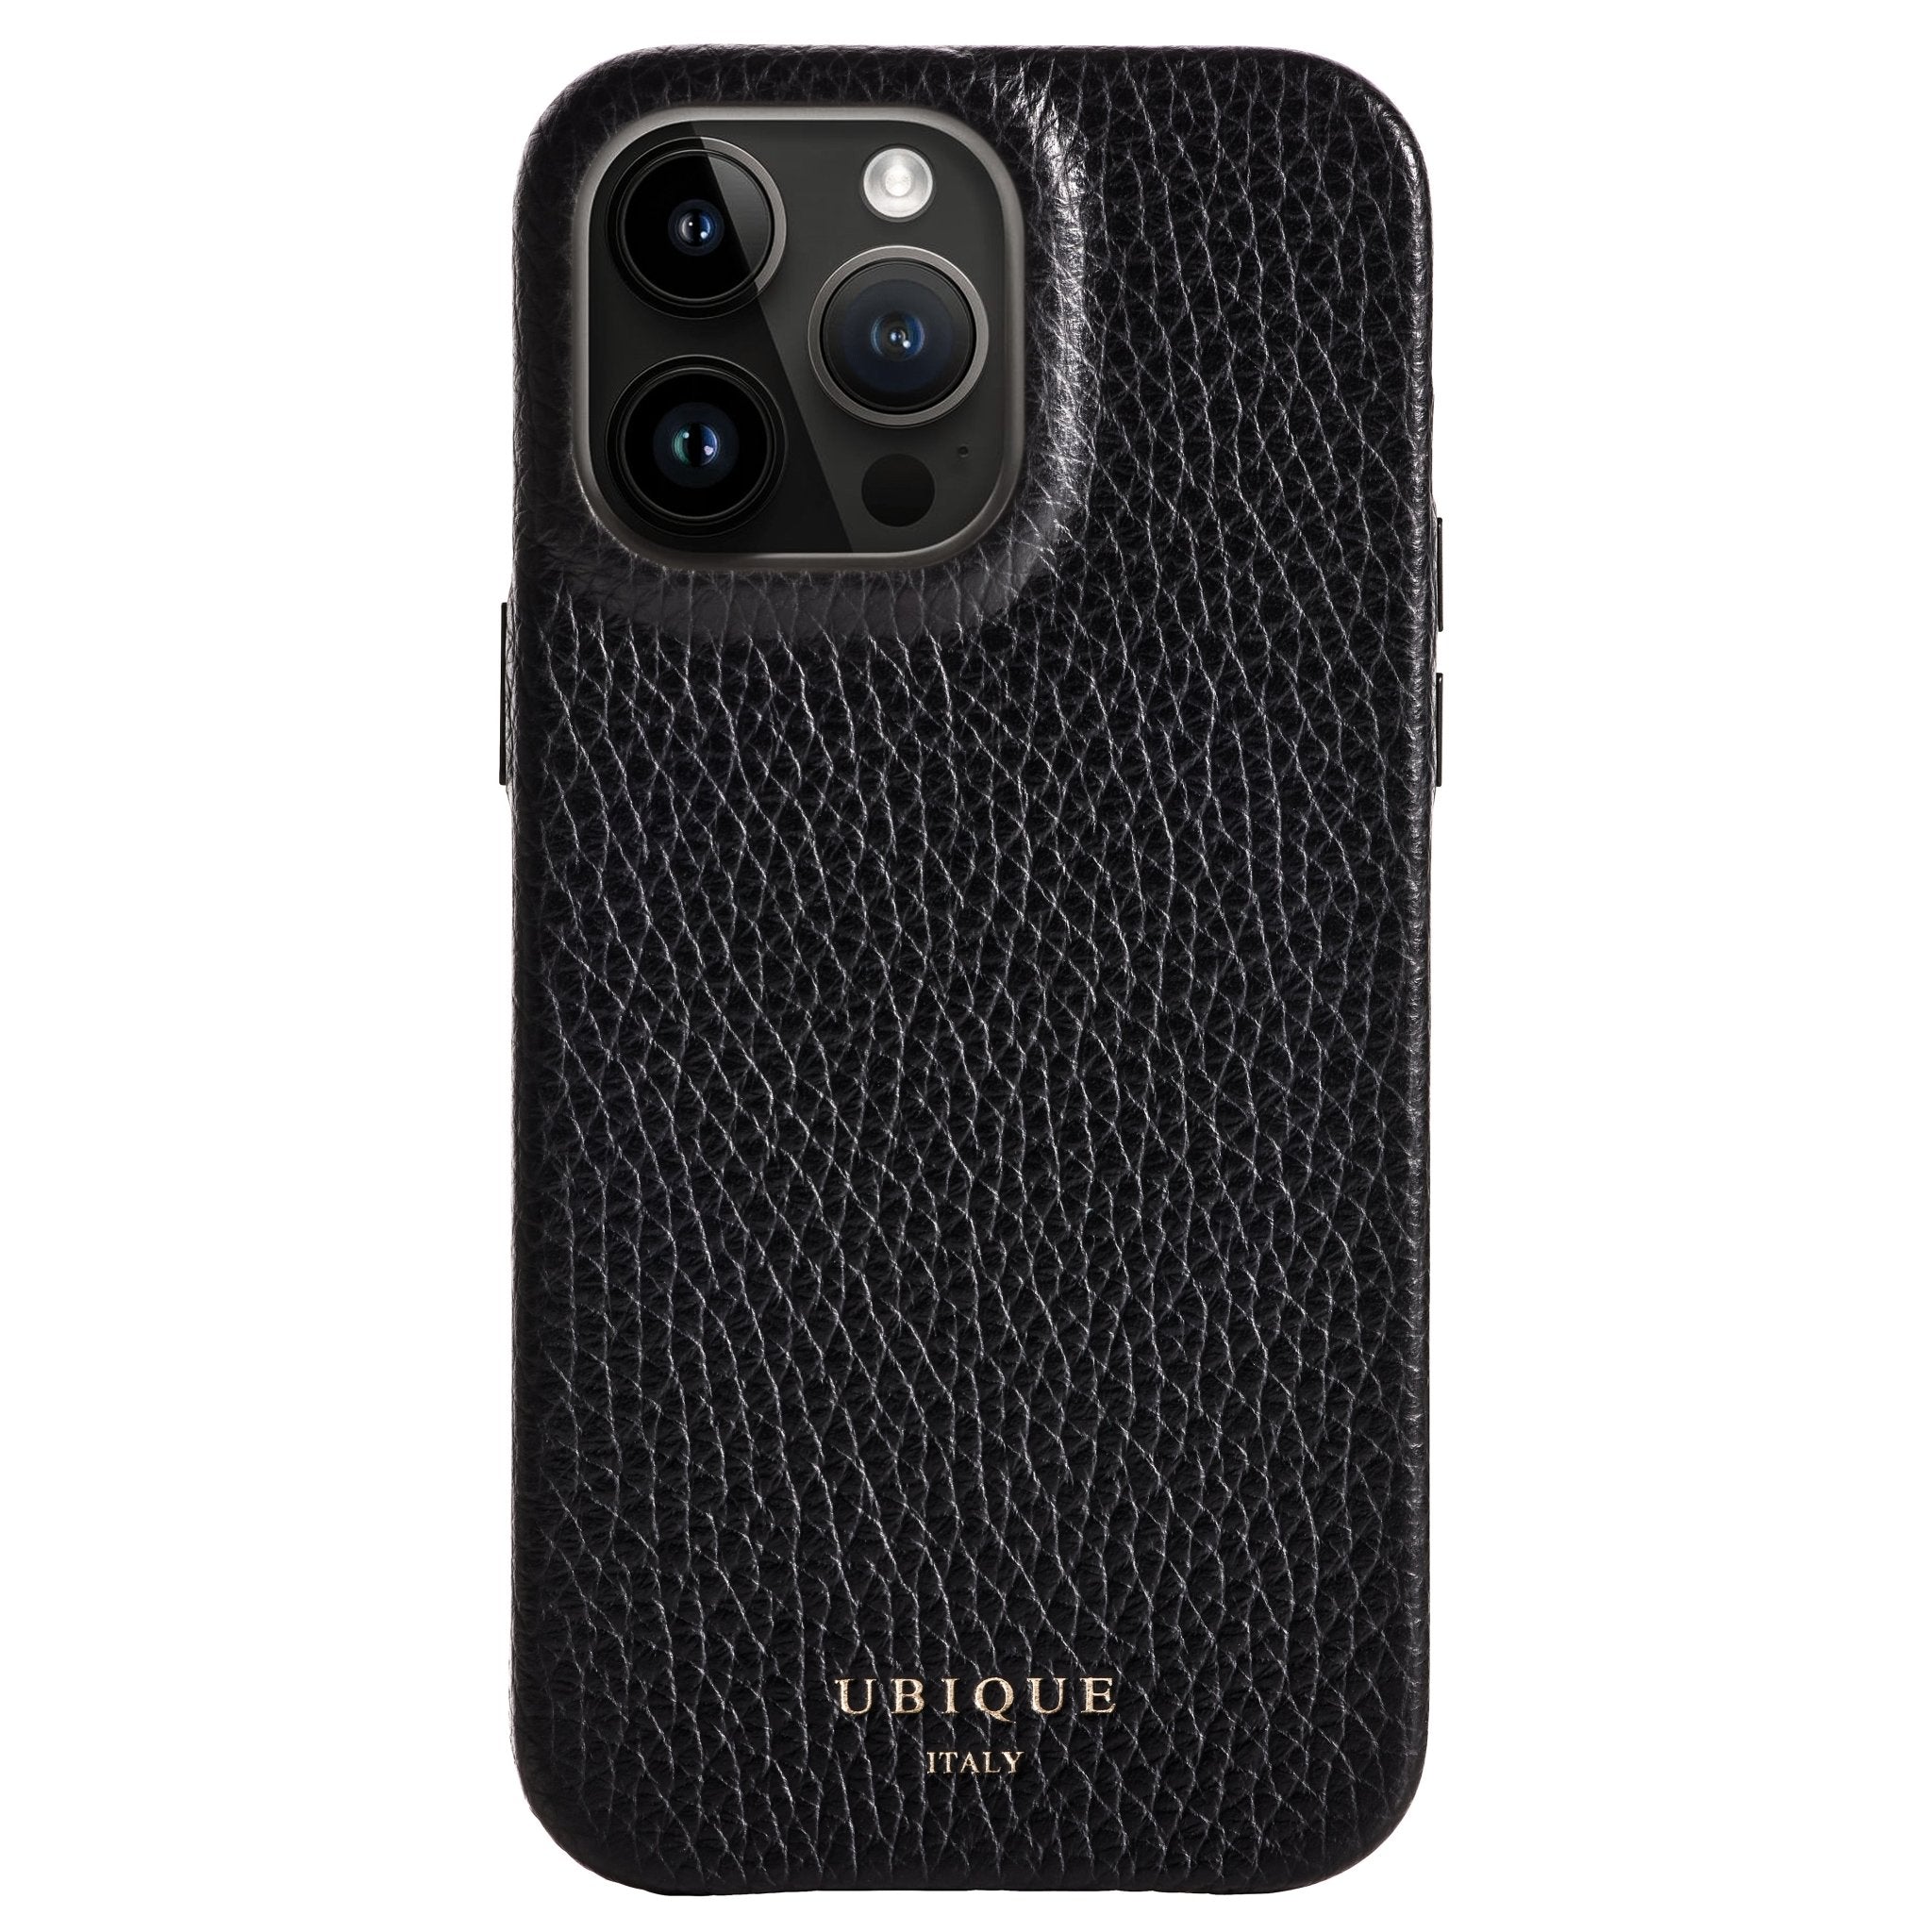 Ubique Italy Luxury iPhone Case 14 Pro Max Pebble Grain Leather Classic Black Front